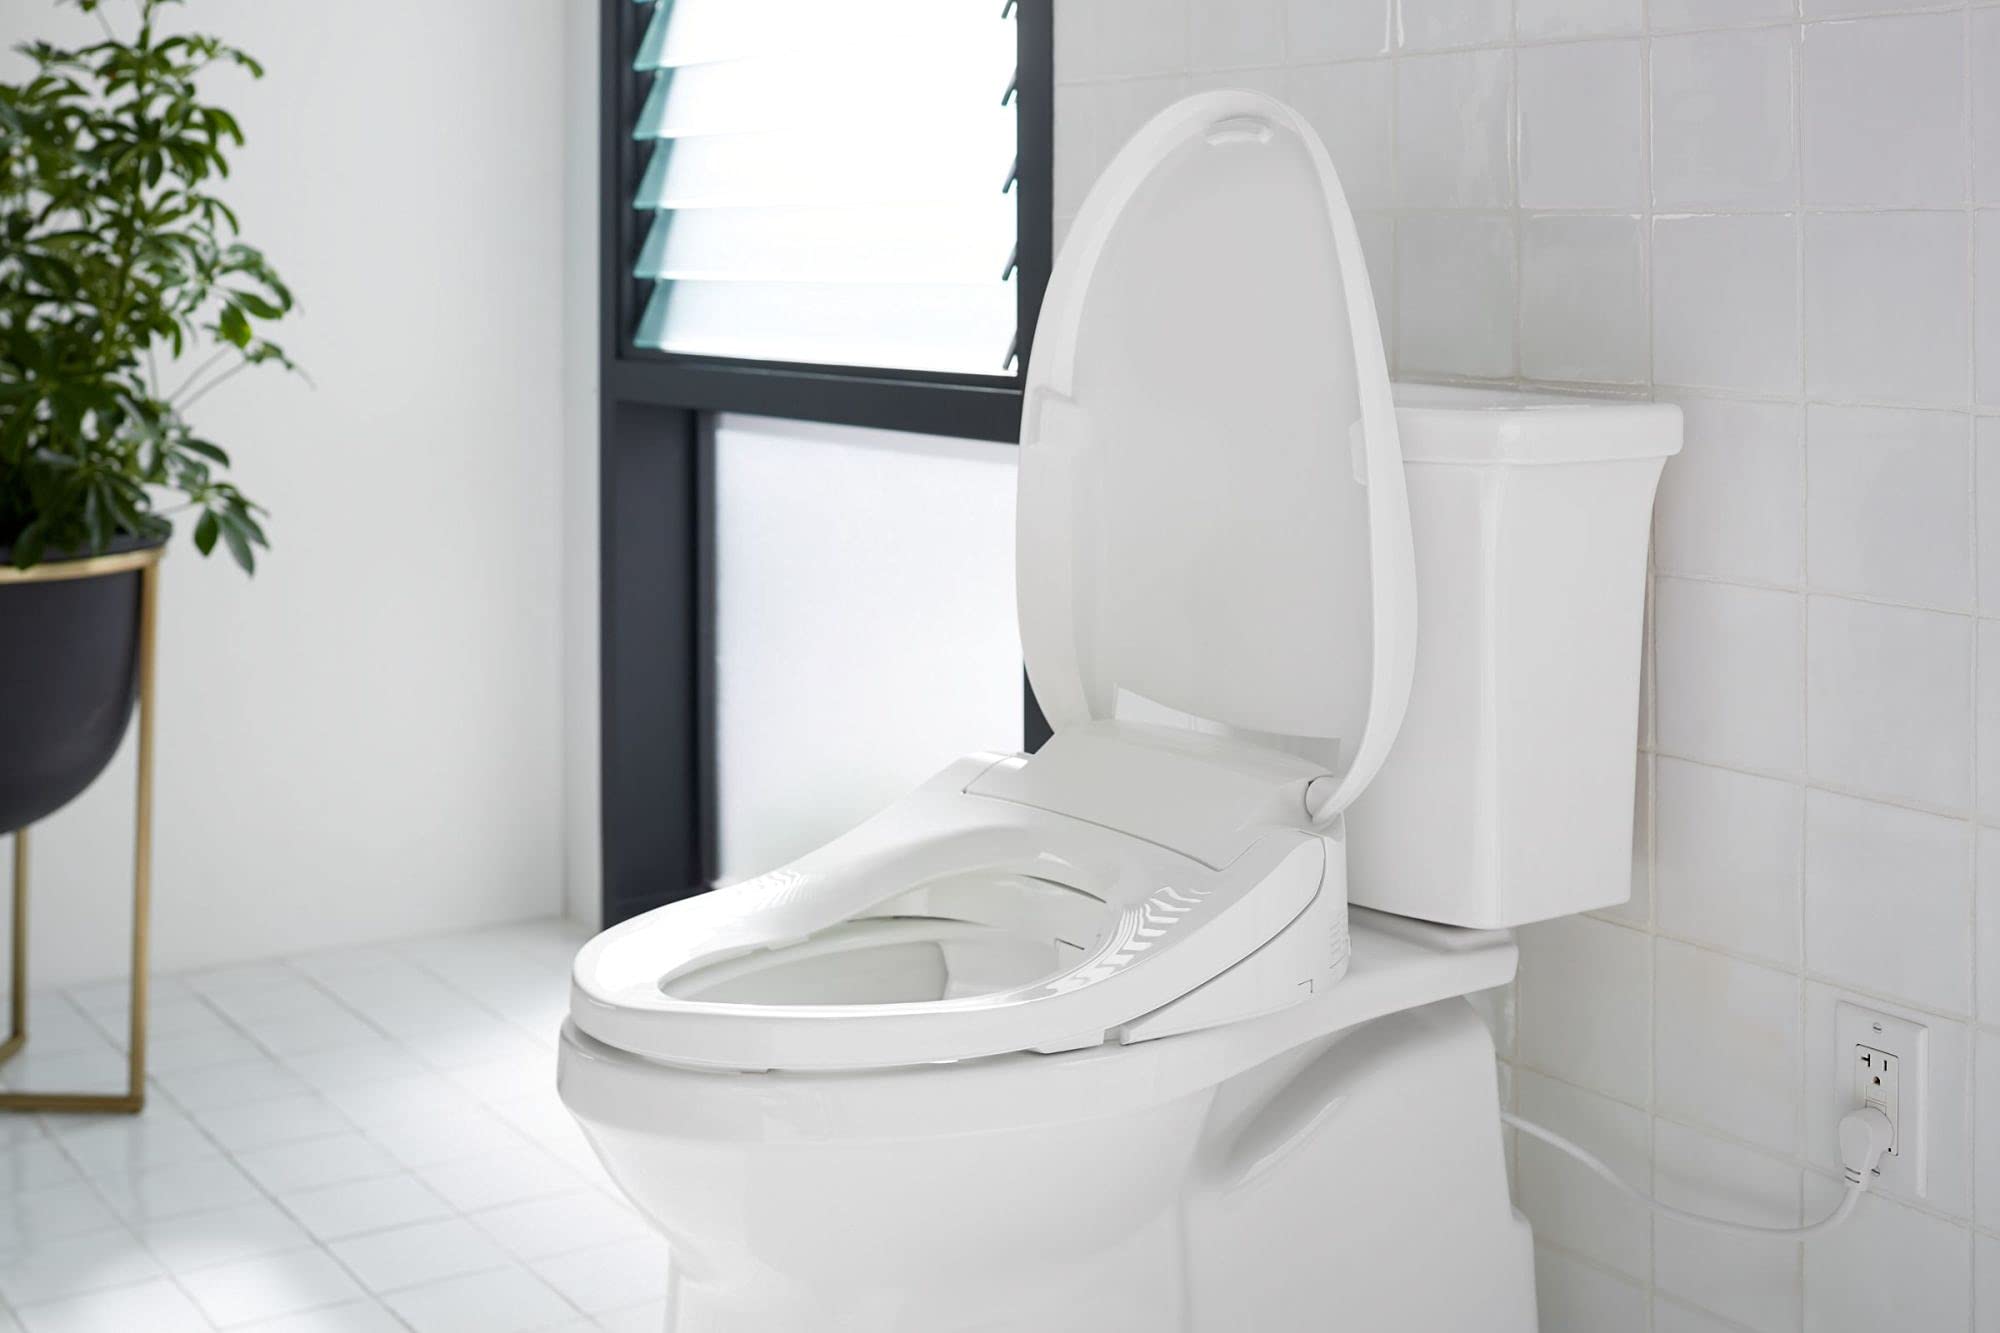 KOHLER 8298-CR-0 C3-455 Elongated Bidet Toilet Seat, Heated Bidet, Bidets for Existing Toilets with Remote Control, White